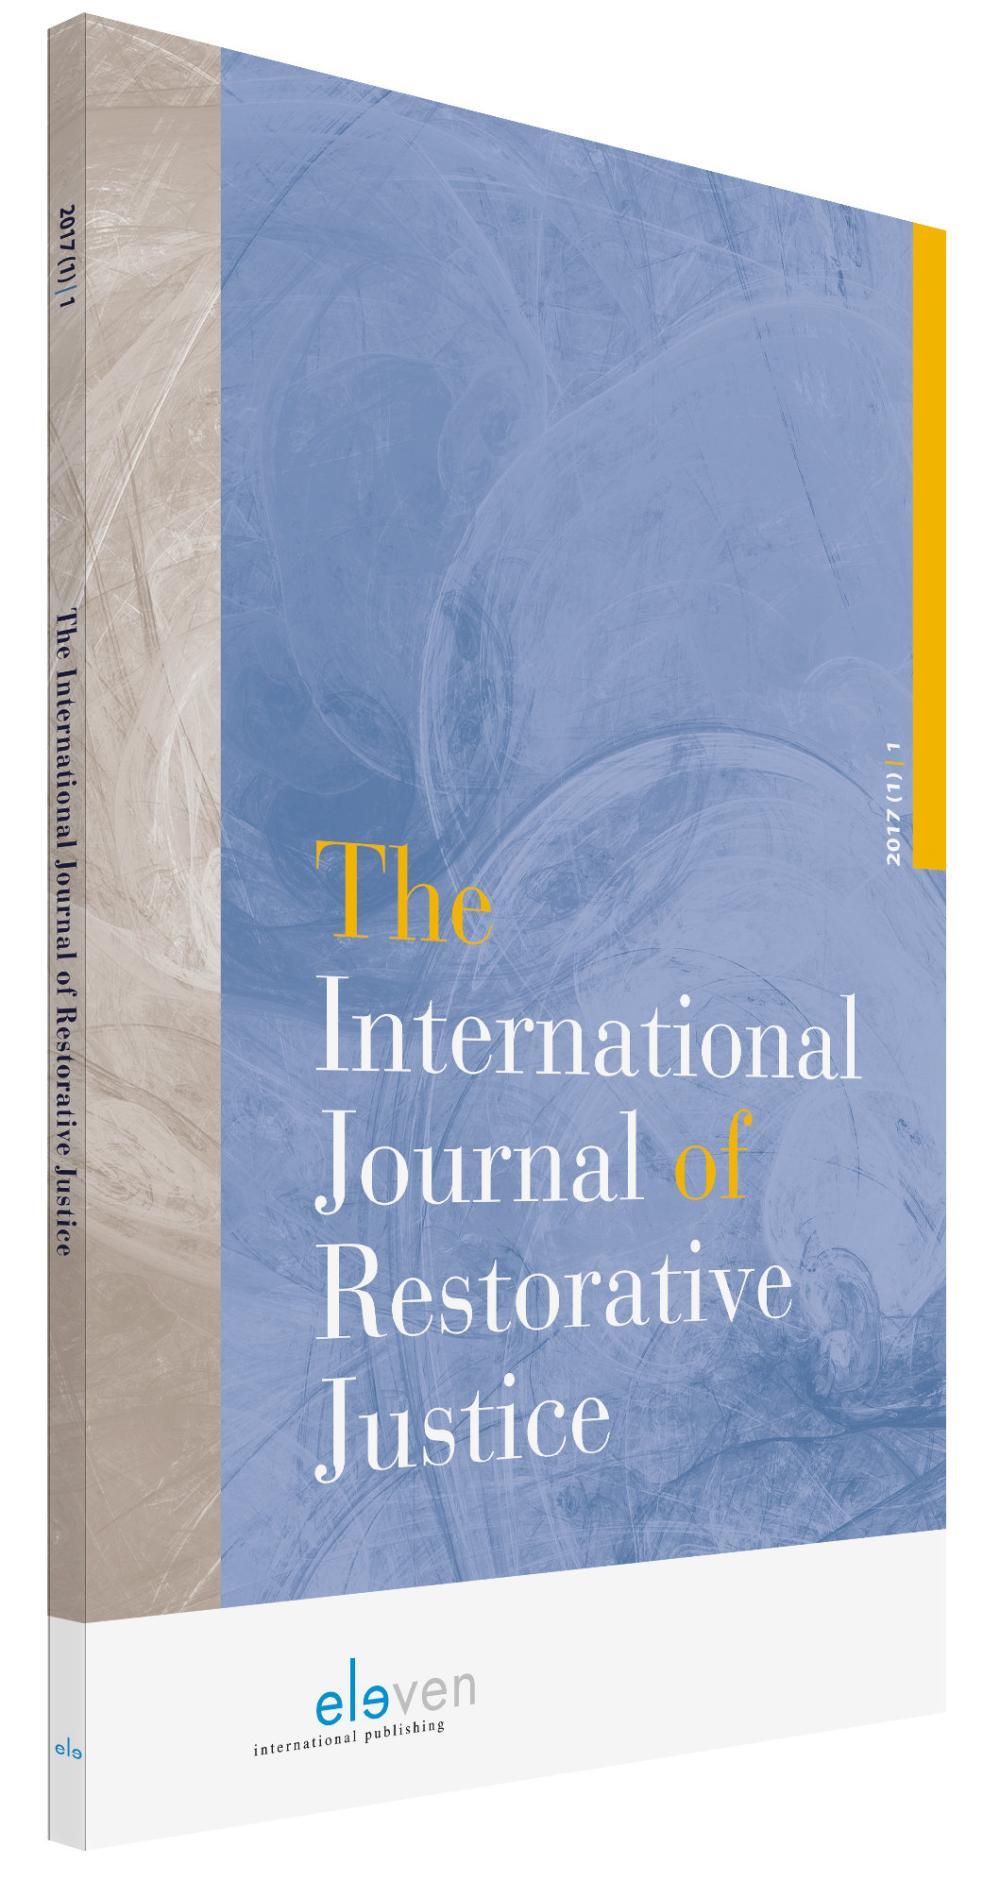 The International Journal of Restorative Justice